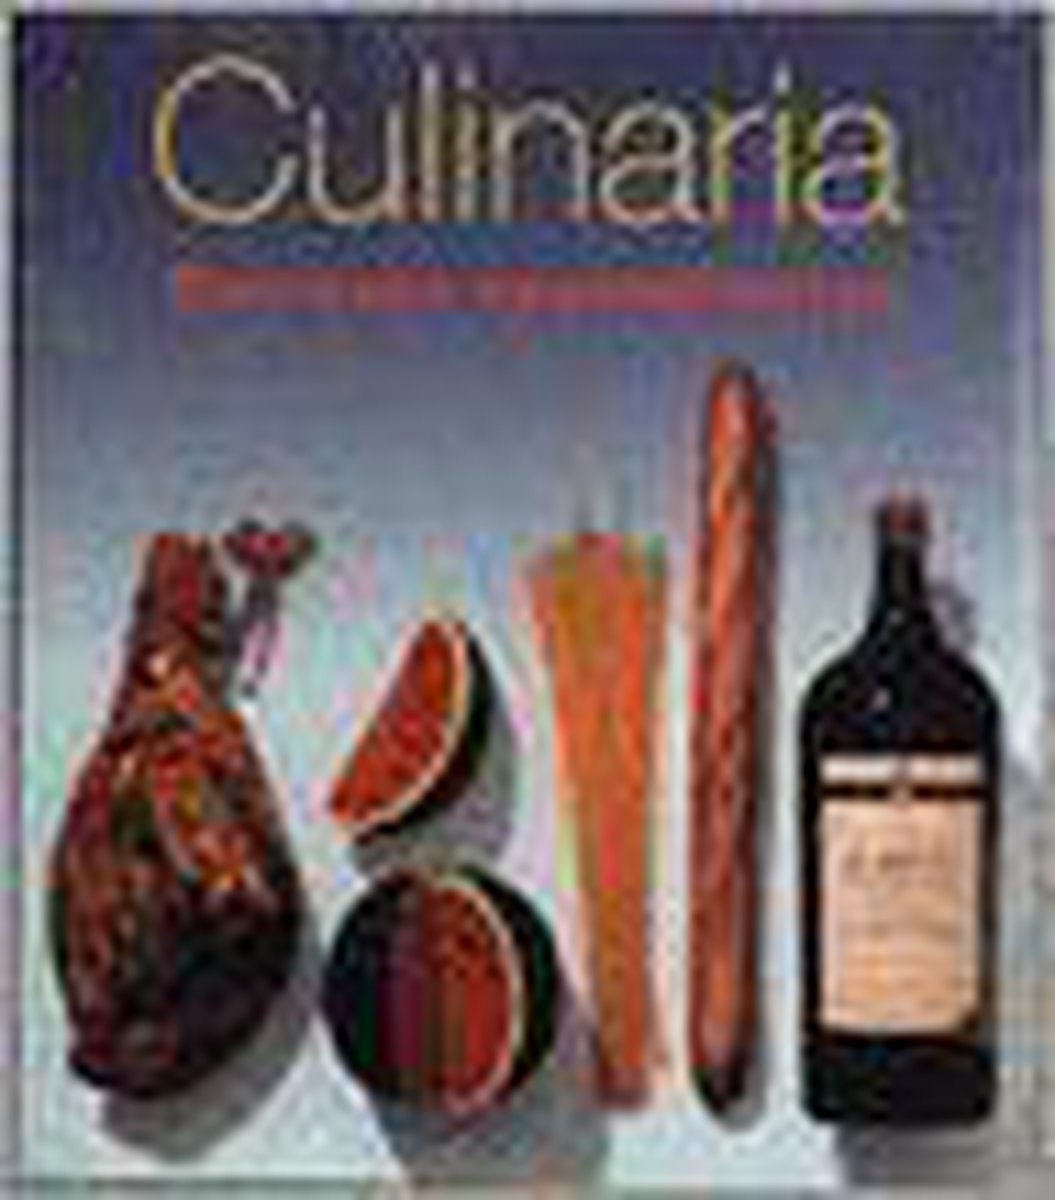 Culinaria Europese Specialiteiten